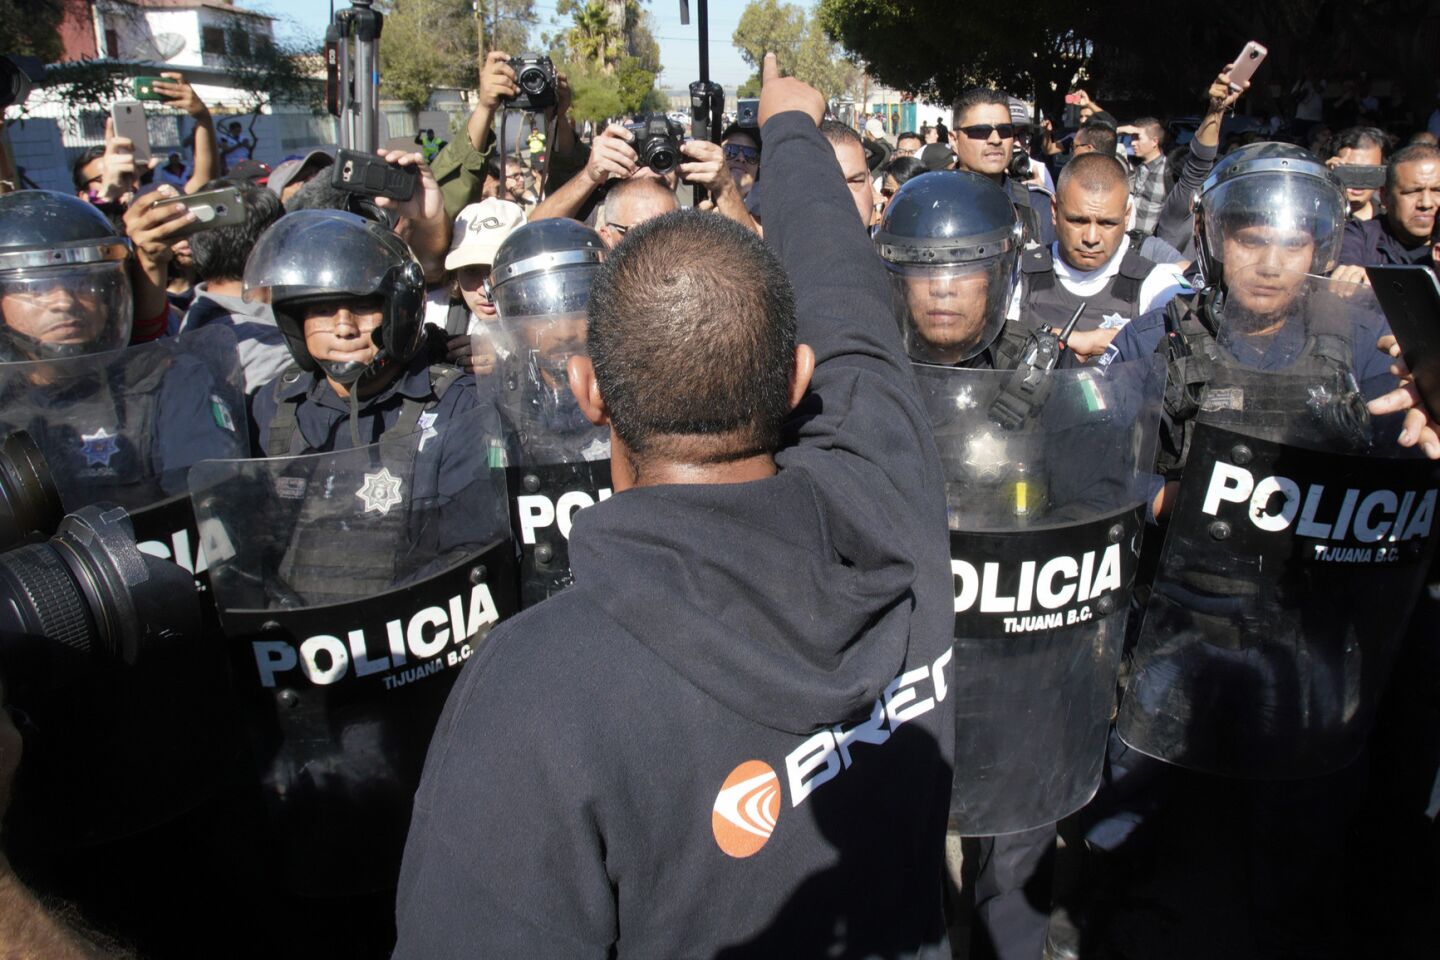 Anti-caravan protest starts peaceful, turns tense outside Tijuana shelter